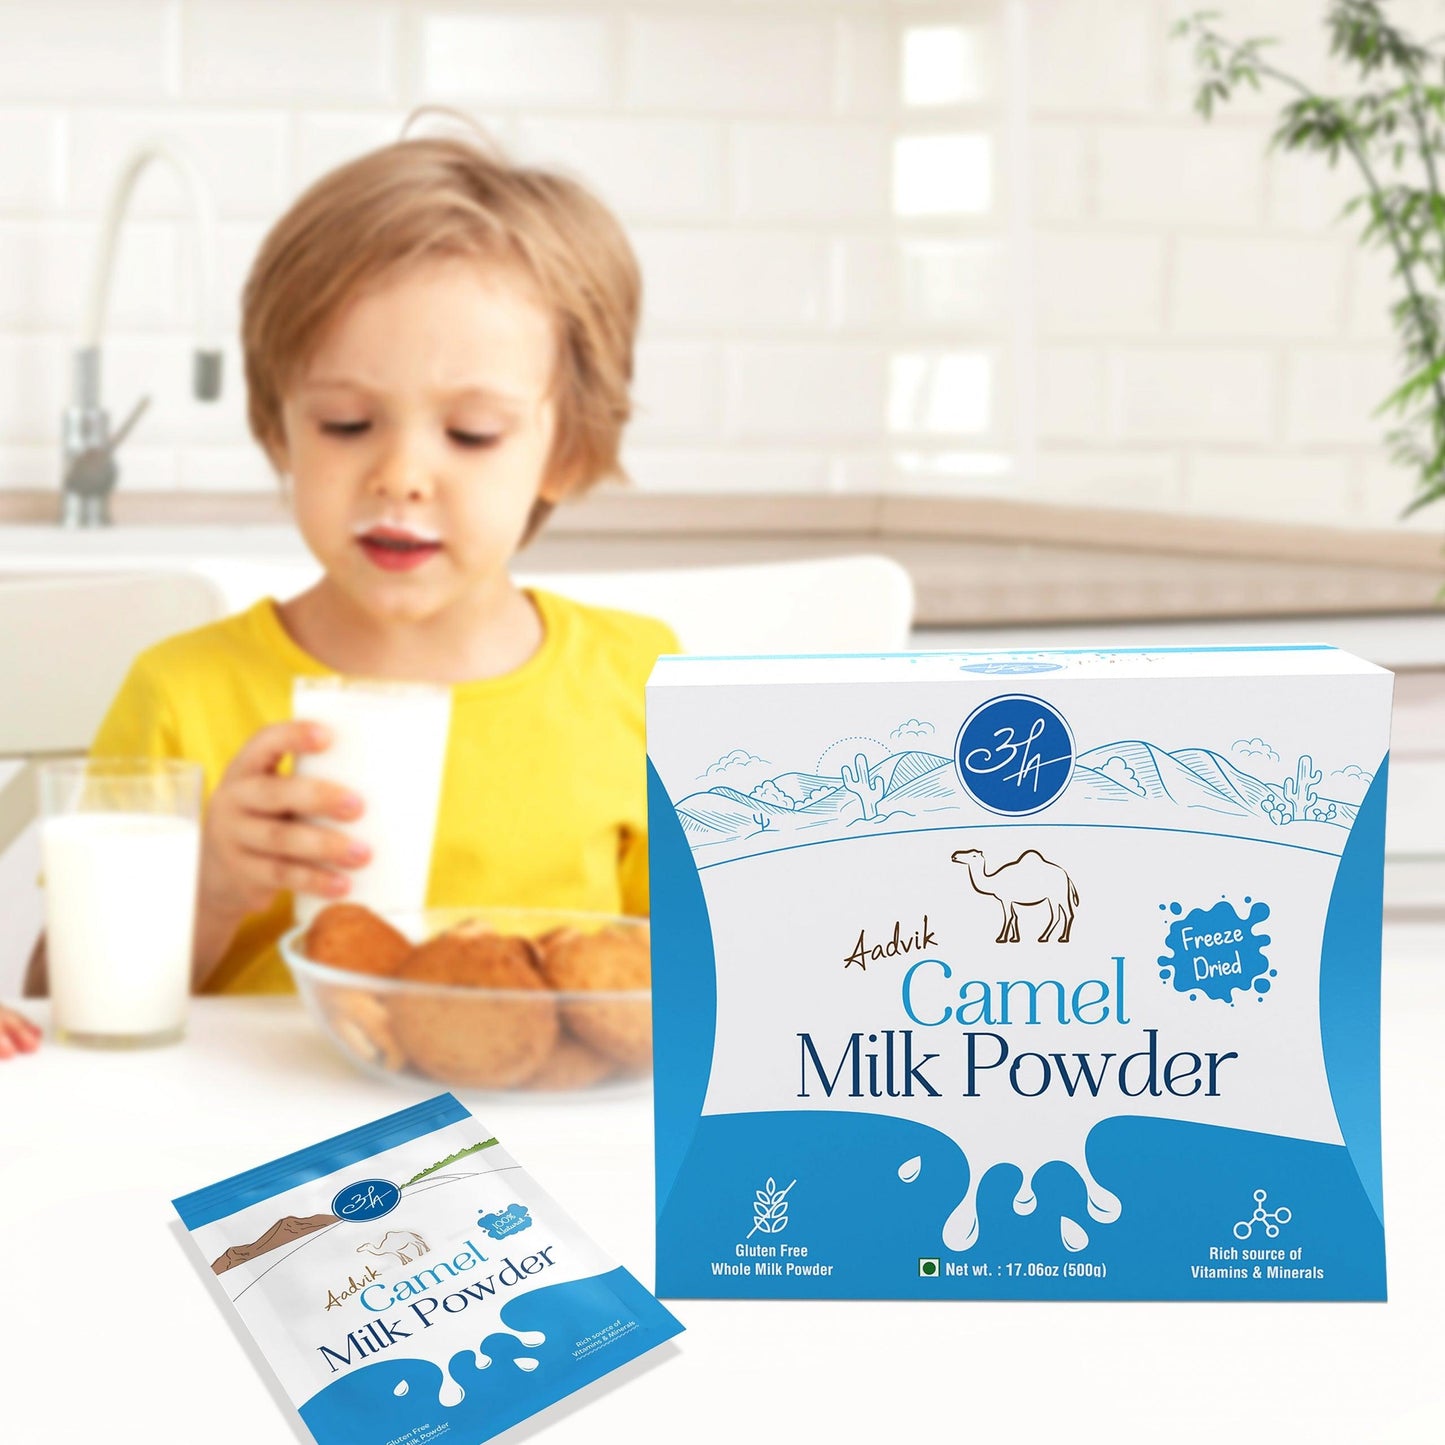 Camel Milk Powder | A Shark Tank Product |100% Pure and Natural | Sachets - Aadvik Foods